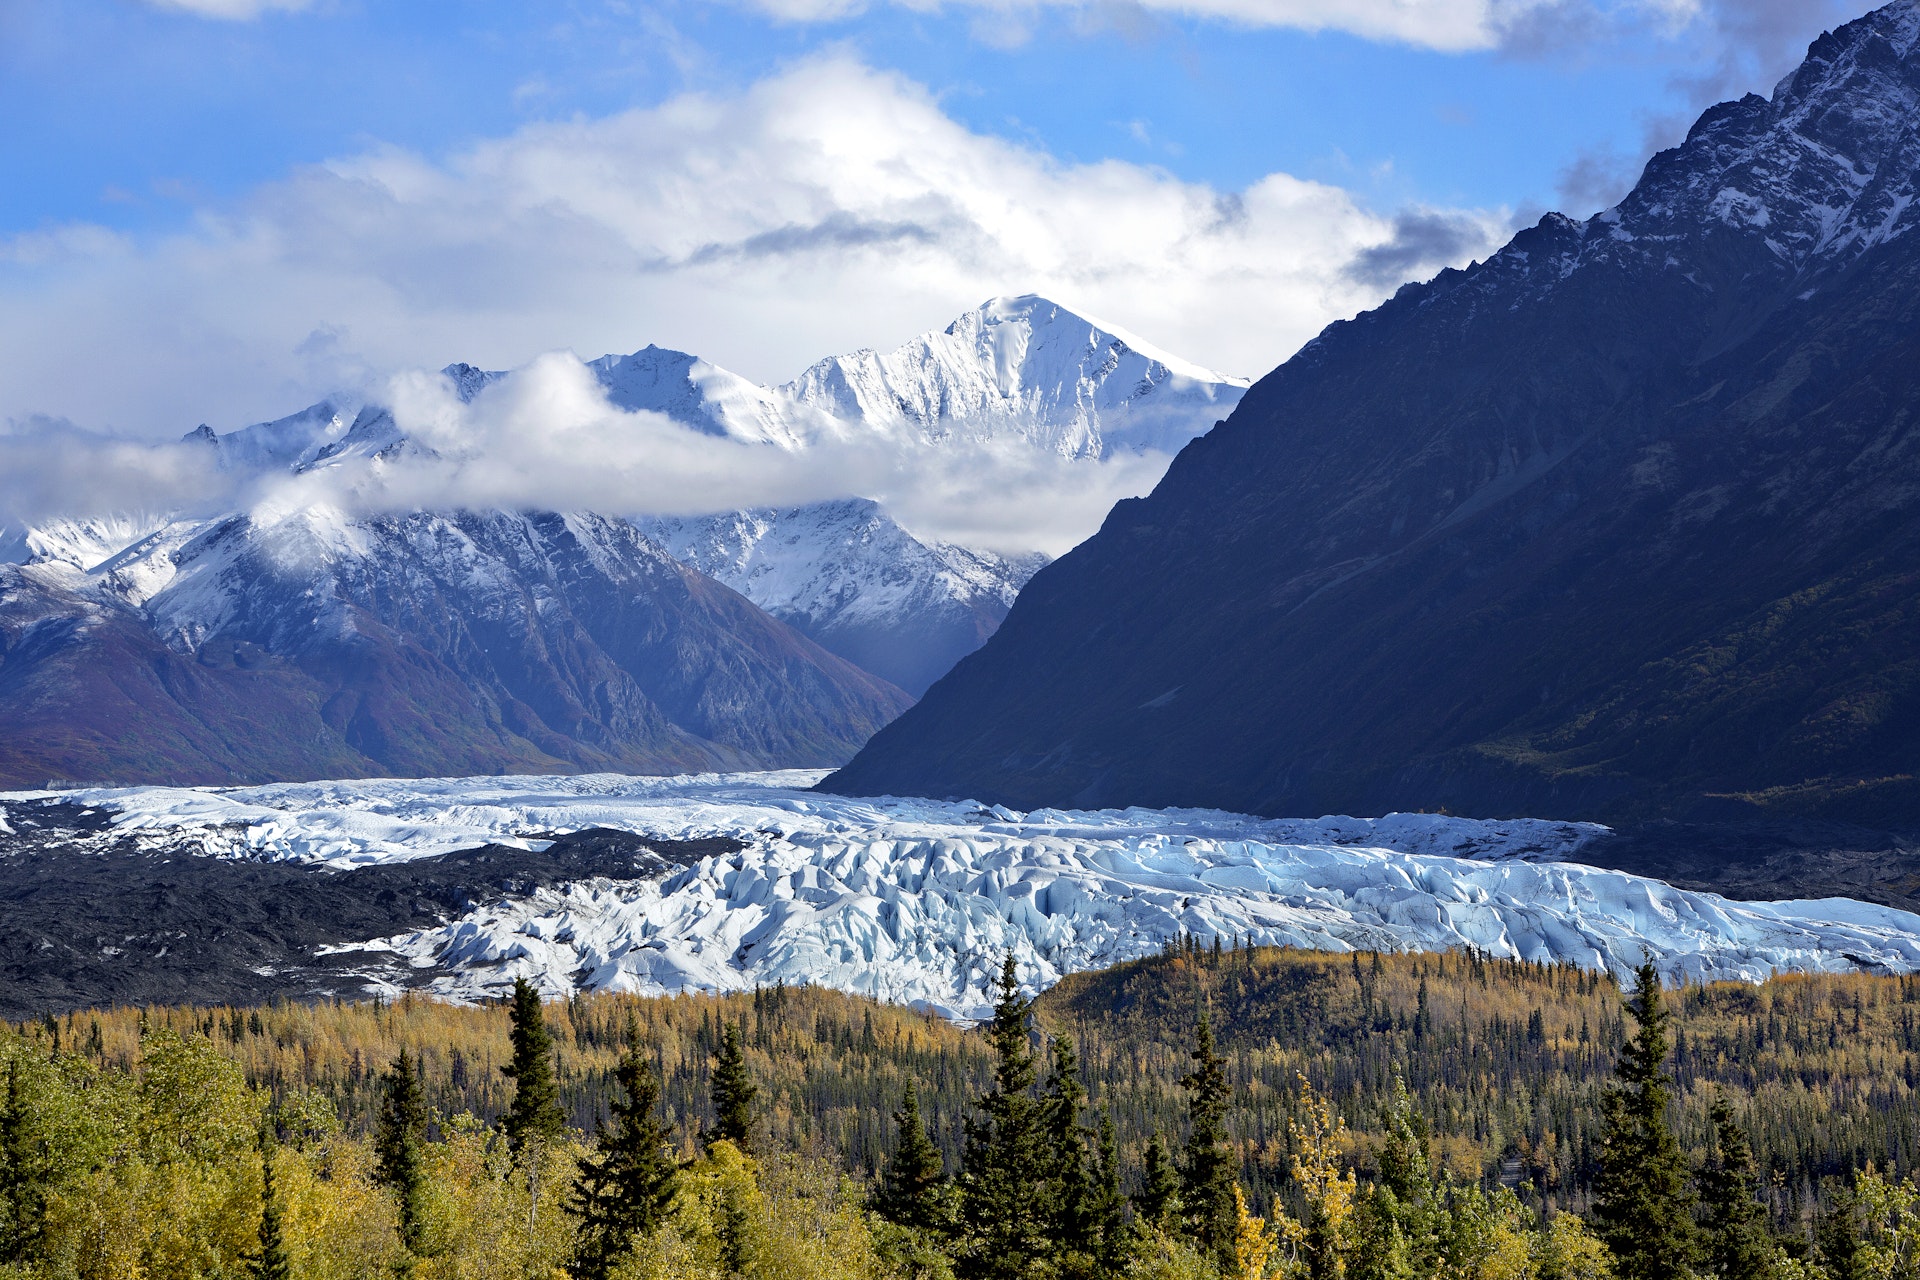 A landscape of a large glacier framed by mountain peaks